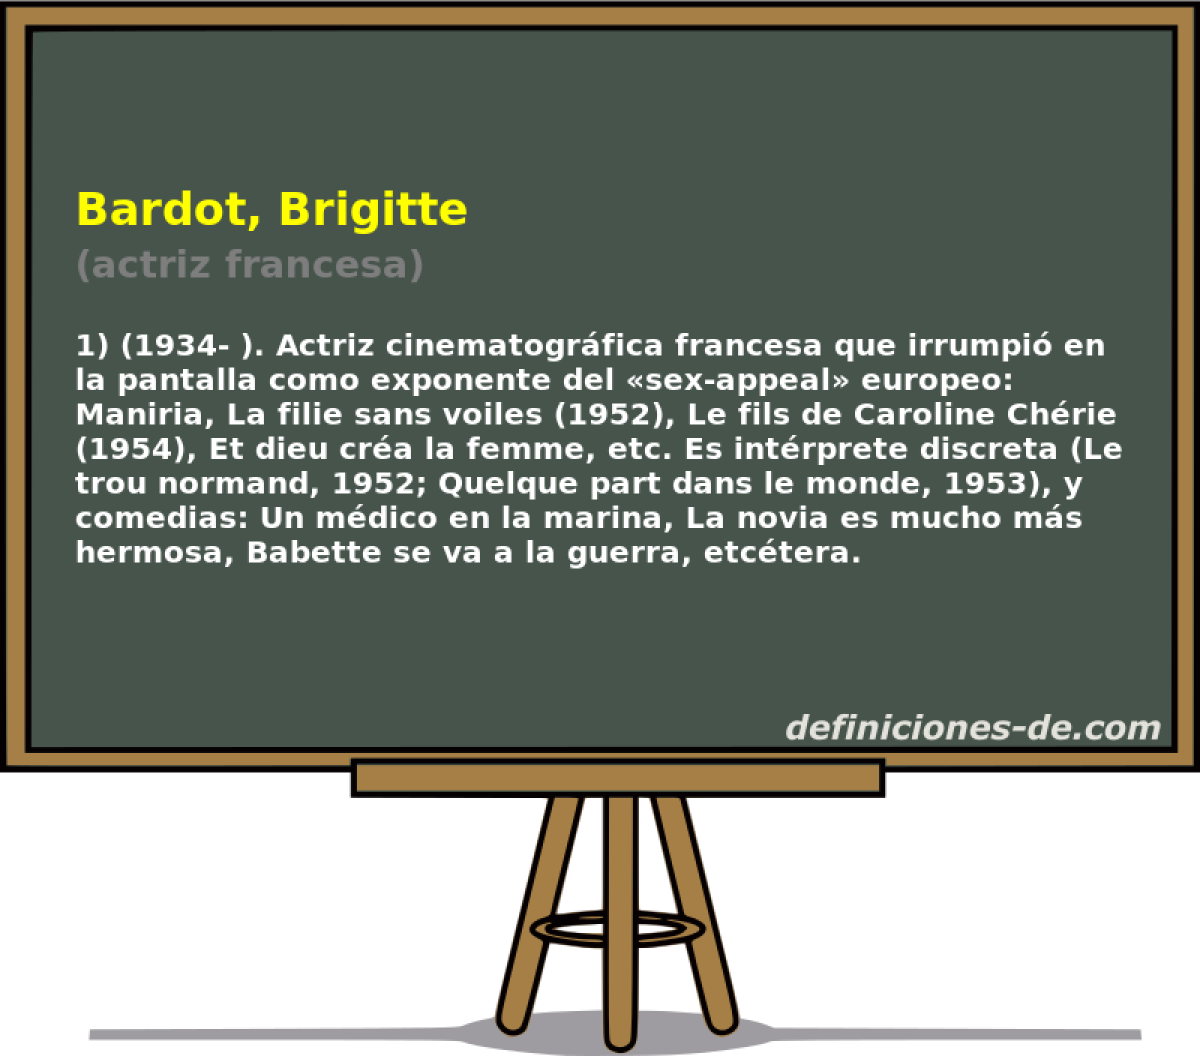 Bardot, Brigitte (actriz francesa)